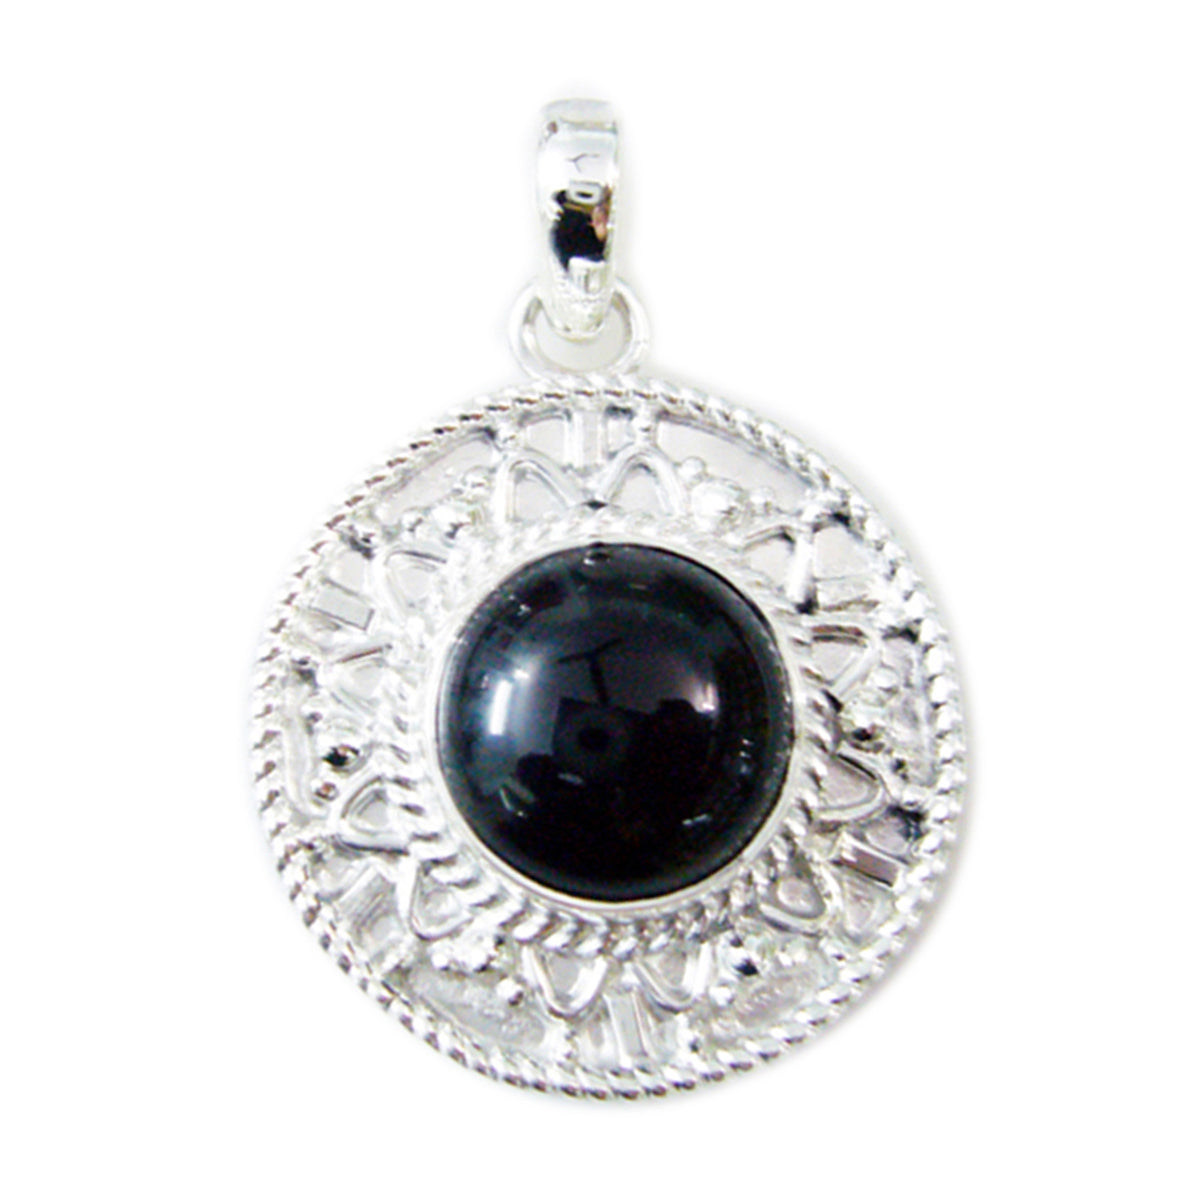 Riyo Aesthetic Gemstone Round Cabochon Black Black Onyx 1190 Sterling Silver Pendant Gift For Good Friday